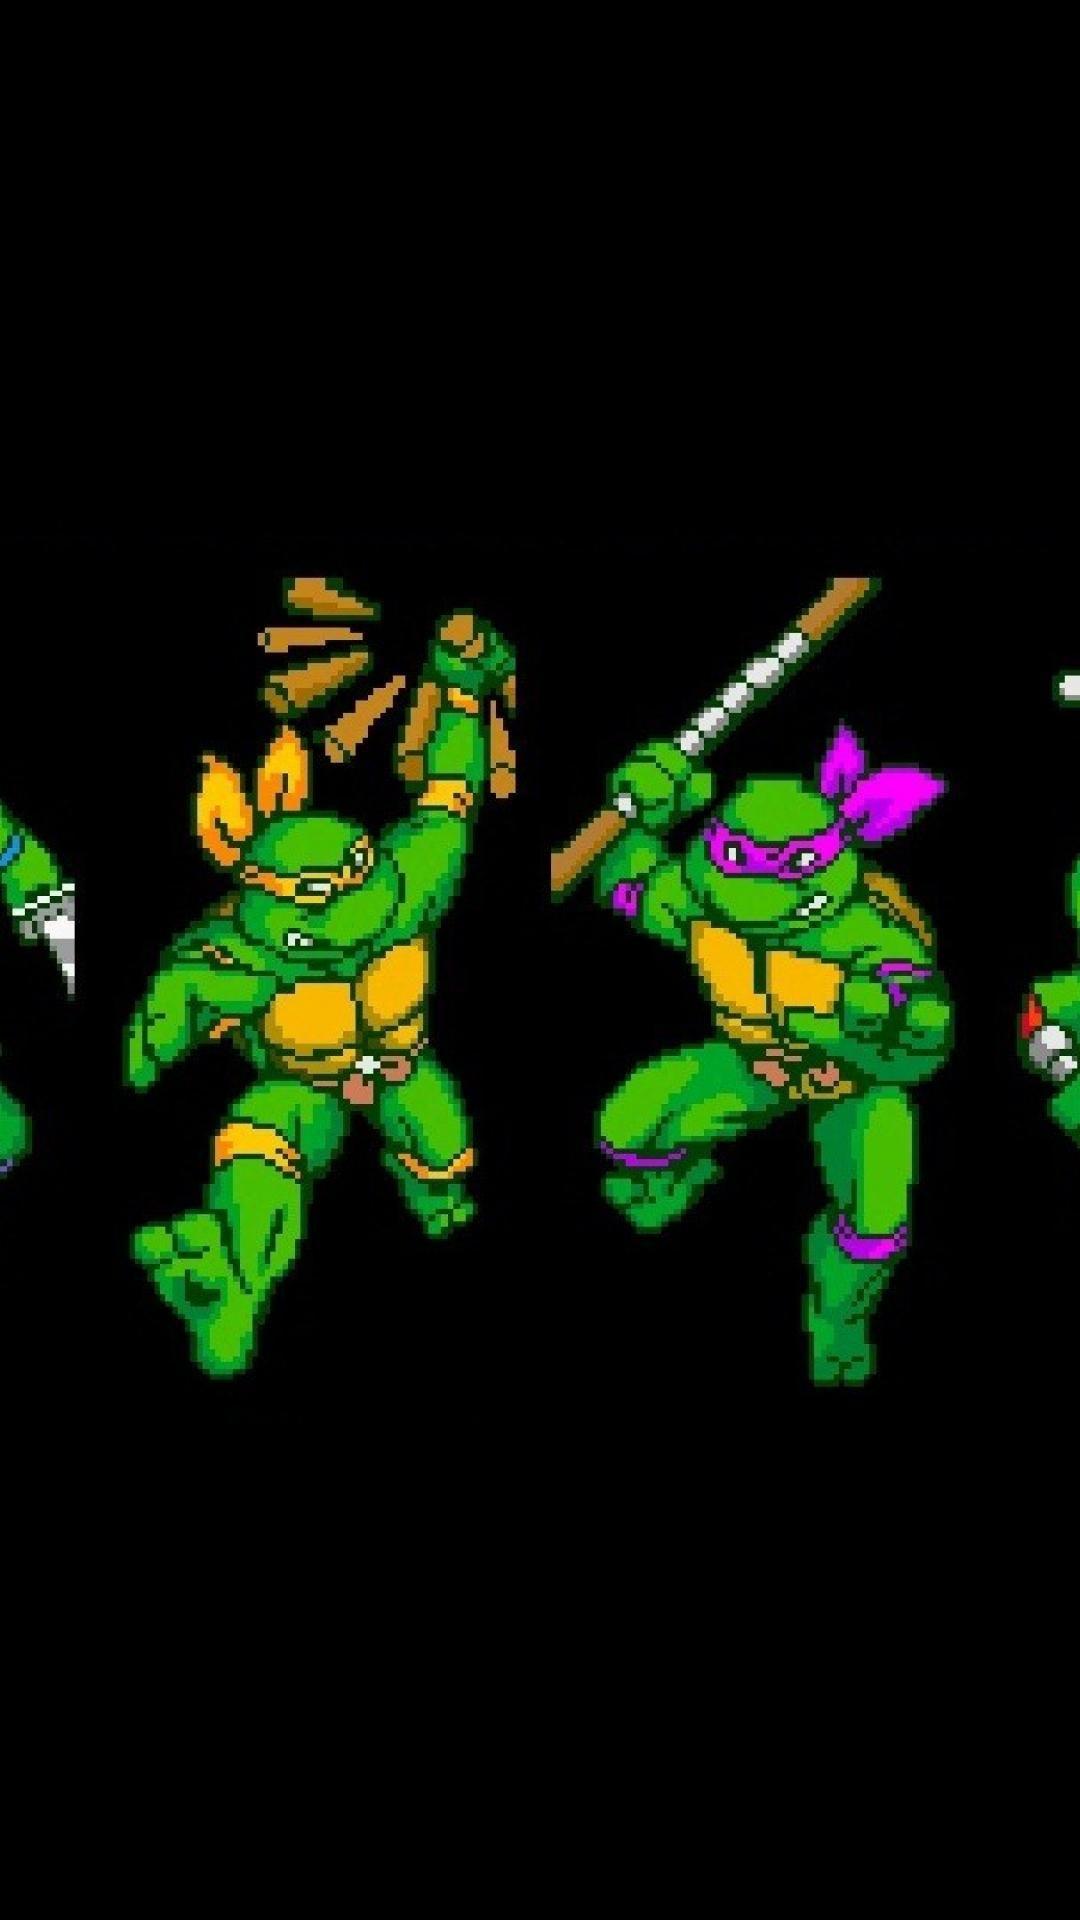 Download wallpaper 800x1200 teenage mutant ninja turtles turtles  minimalism iphone 4s4 for parallax hd background